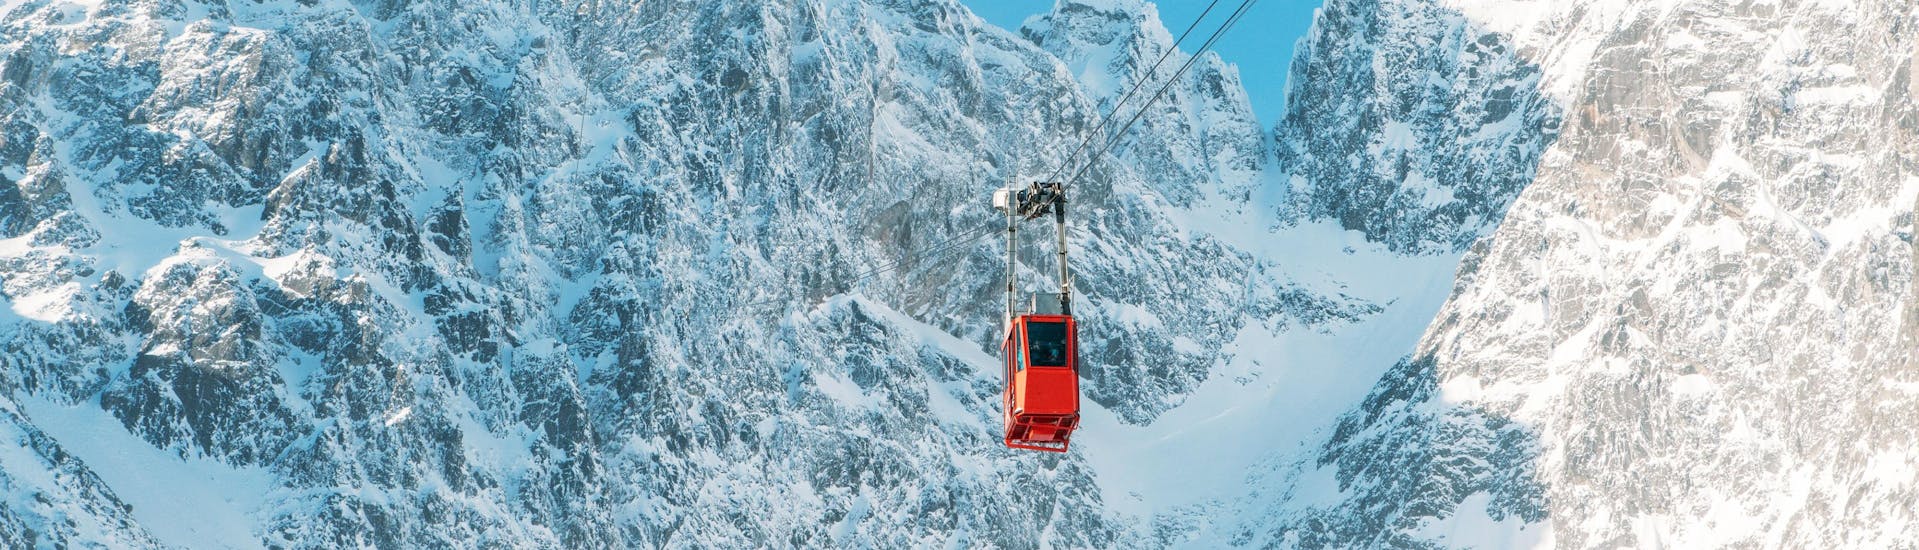 A red gondola going up to a peak in the ski resort Tatranská Lomnica, where local ski schools offer their ski lessons.